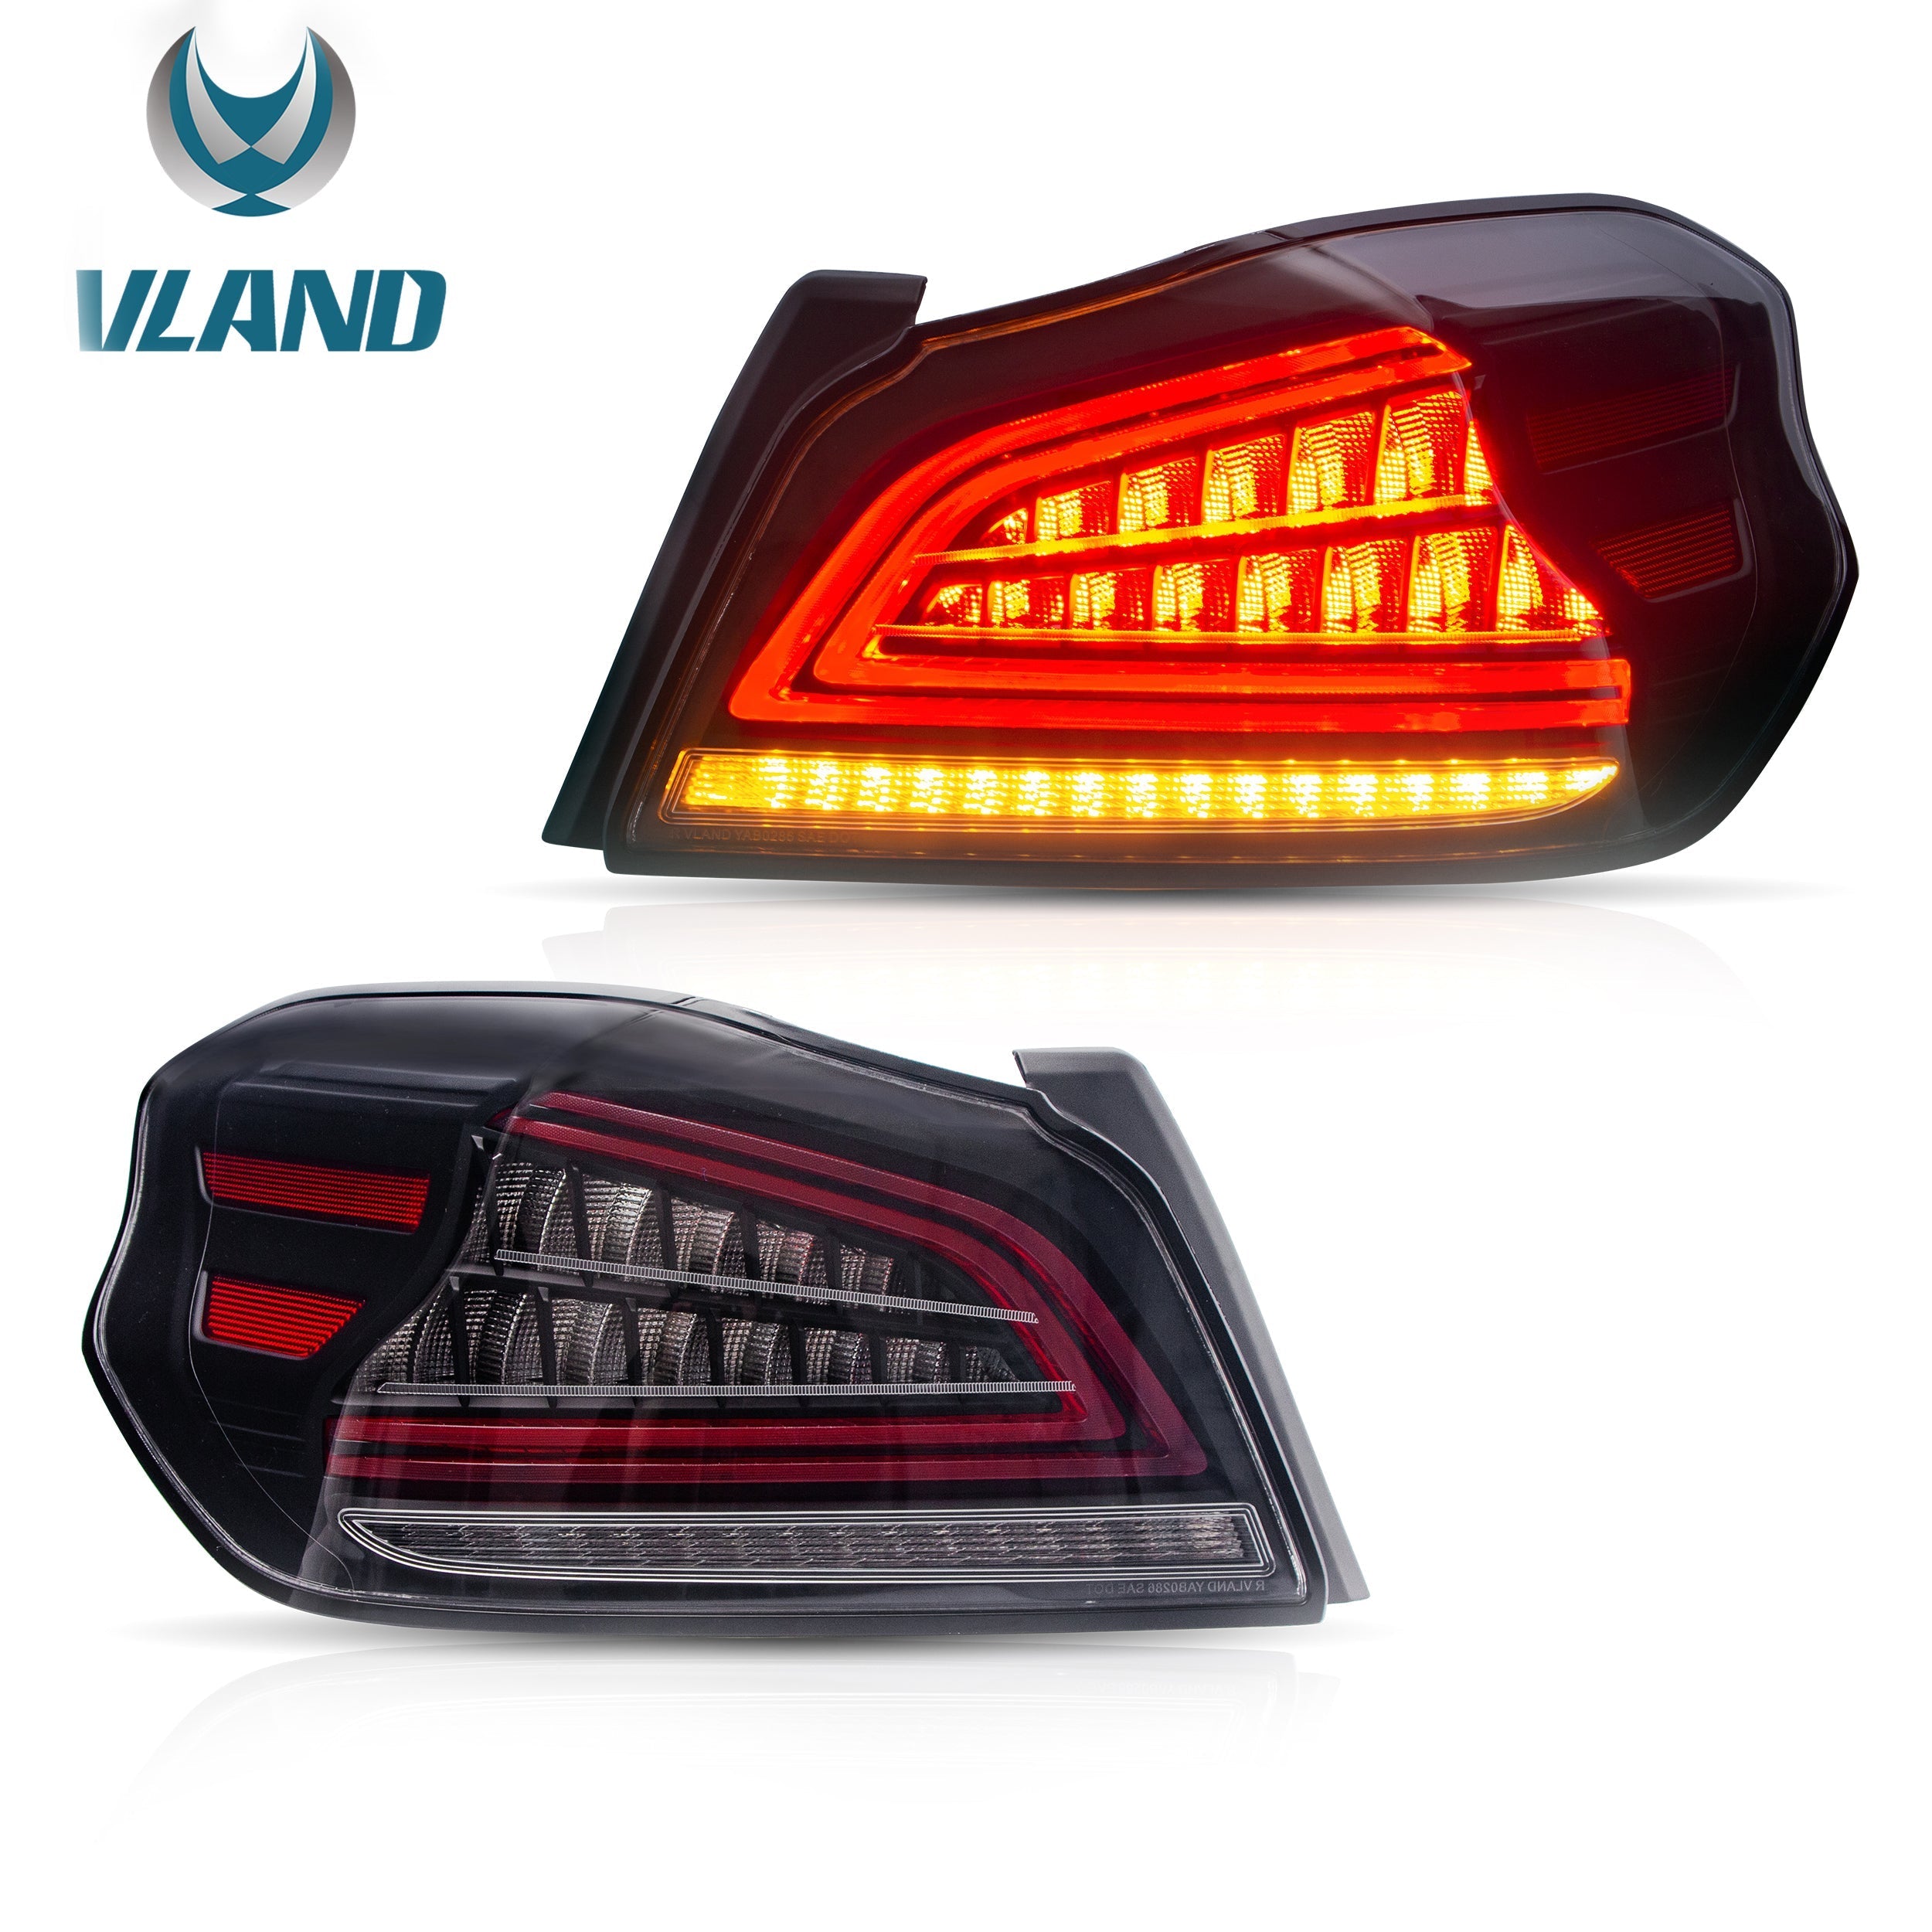 VLAND TAIL LIGHT ASSEMBLY FIT FOR 2015-2019 Subaru WRX / STI 汽车照明系统 Vland Manufacturer CLEAR 